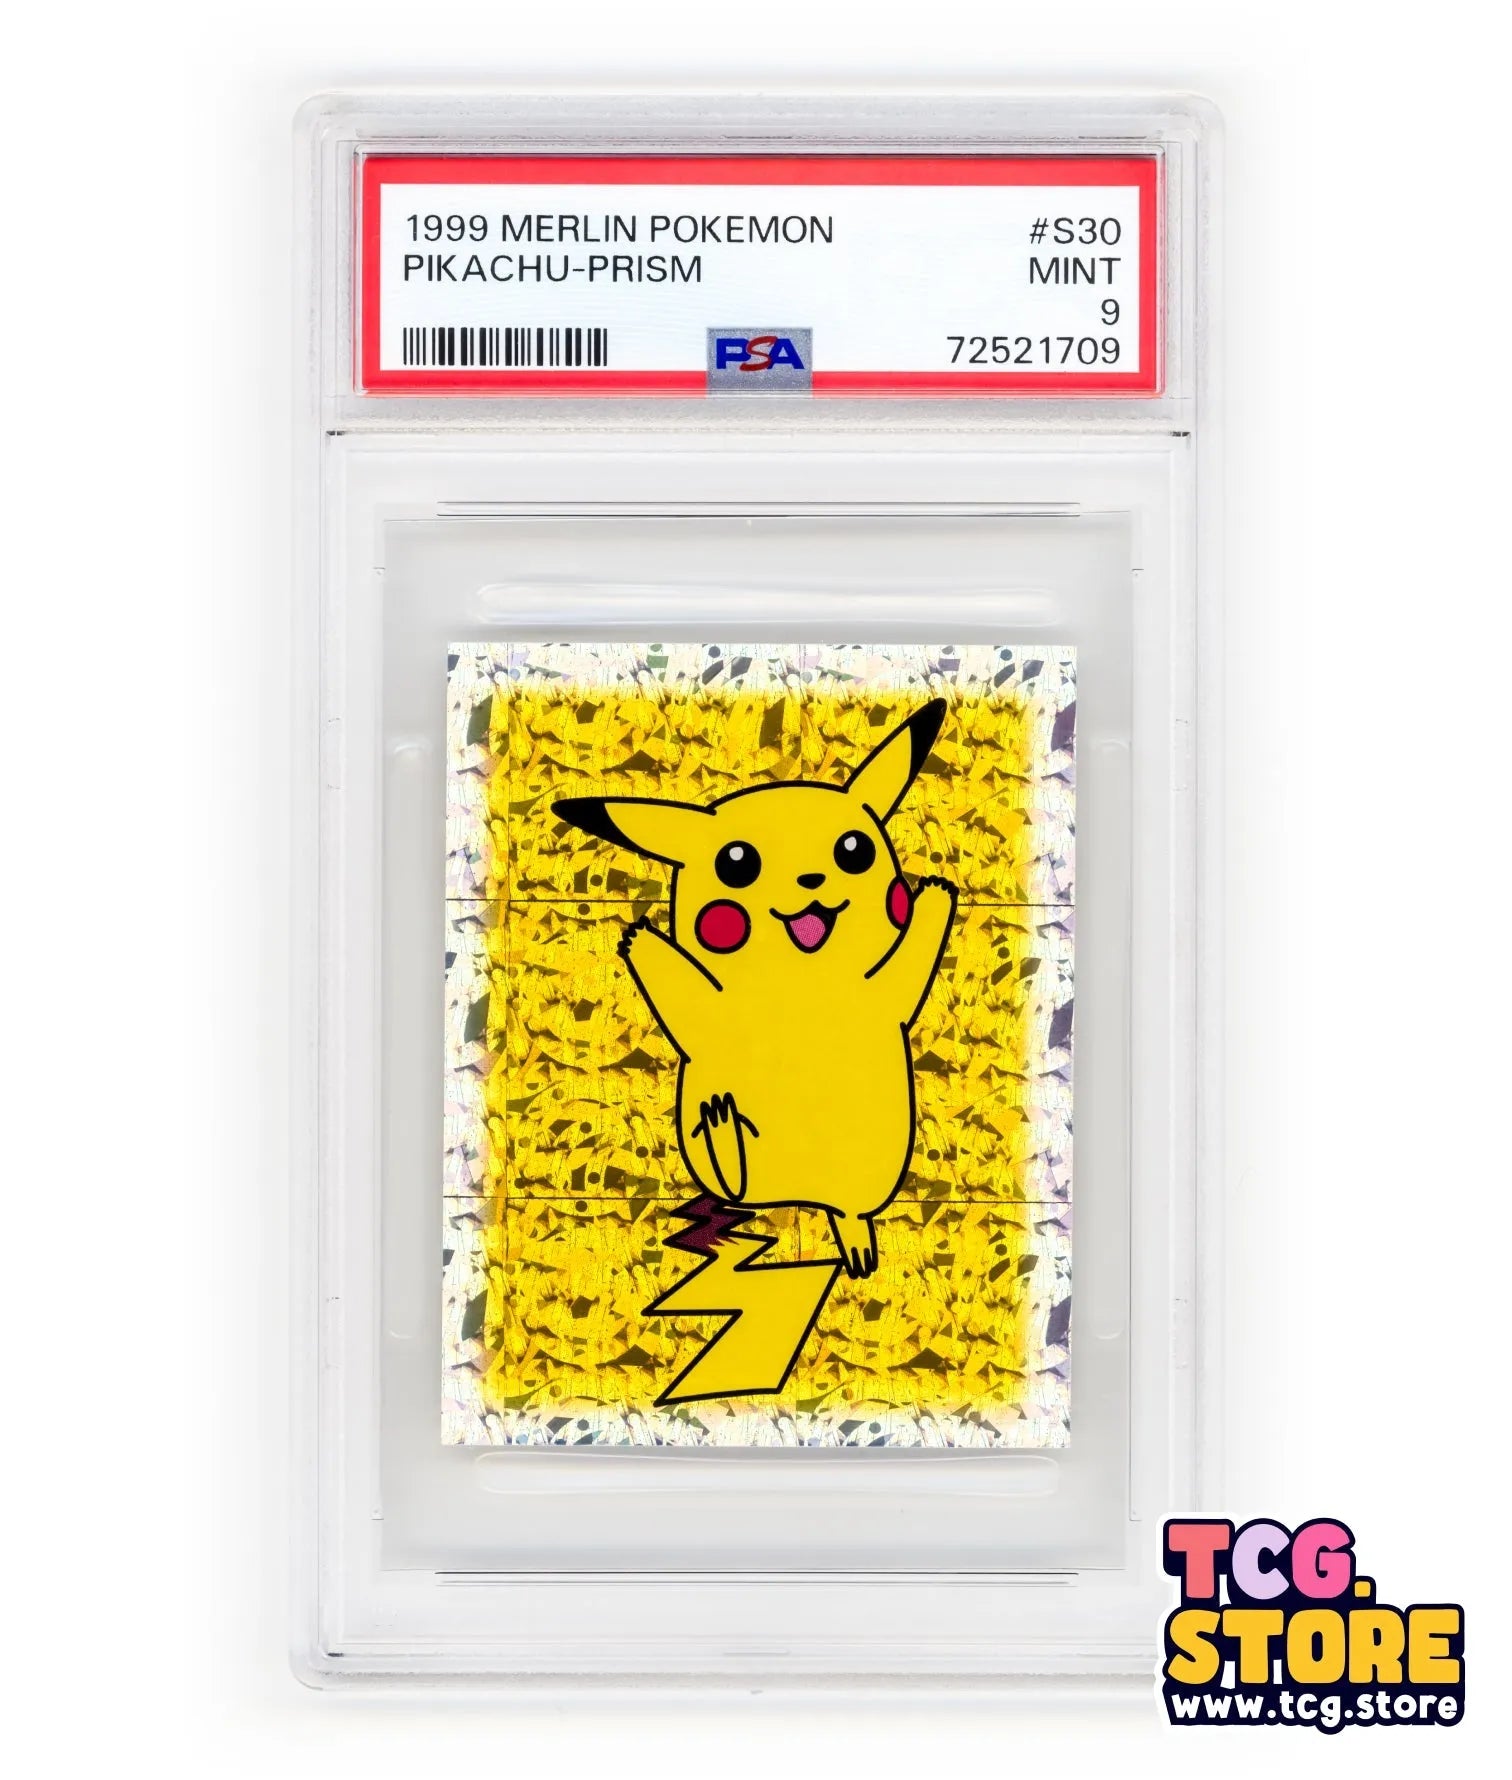 1999 Merlin Pokemon Pikachu #S30 Prism Sticker - PSA 9 - TCG.Store